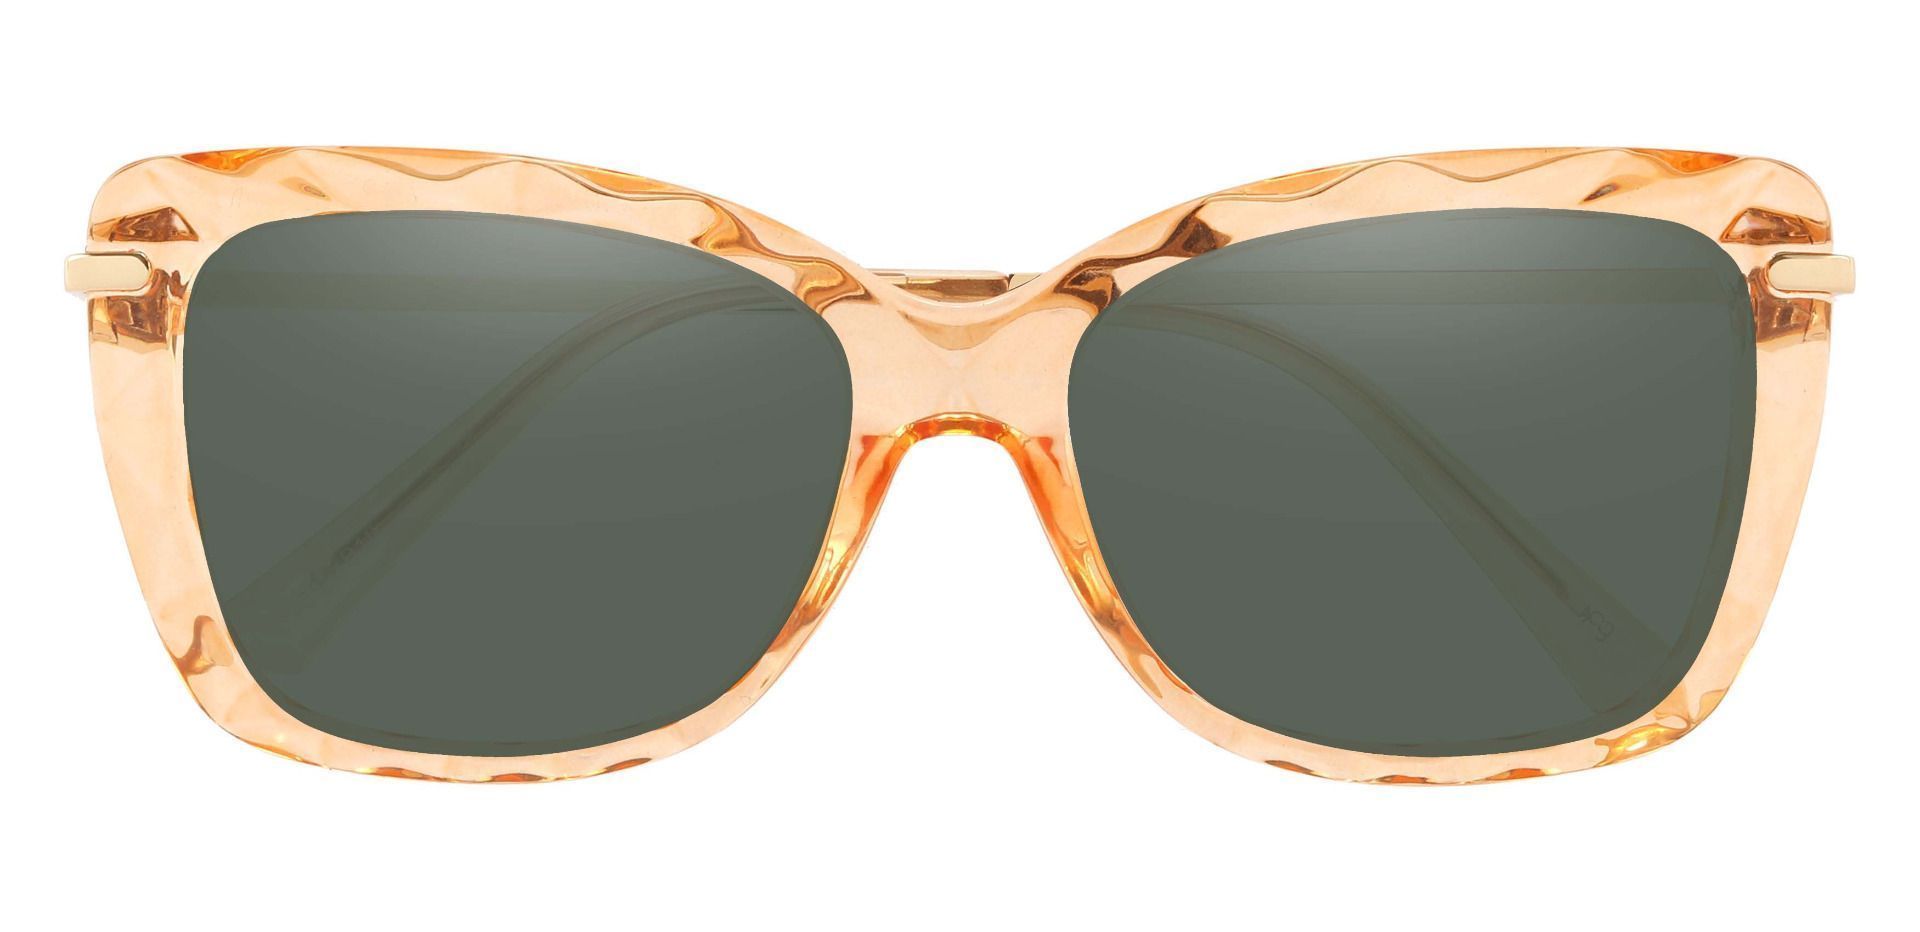 Shoshanna Rectangle Progressive Sunglasses - Brown Frame With Green Lenses